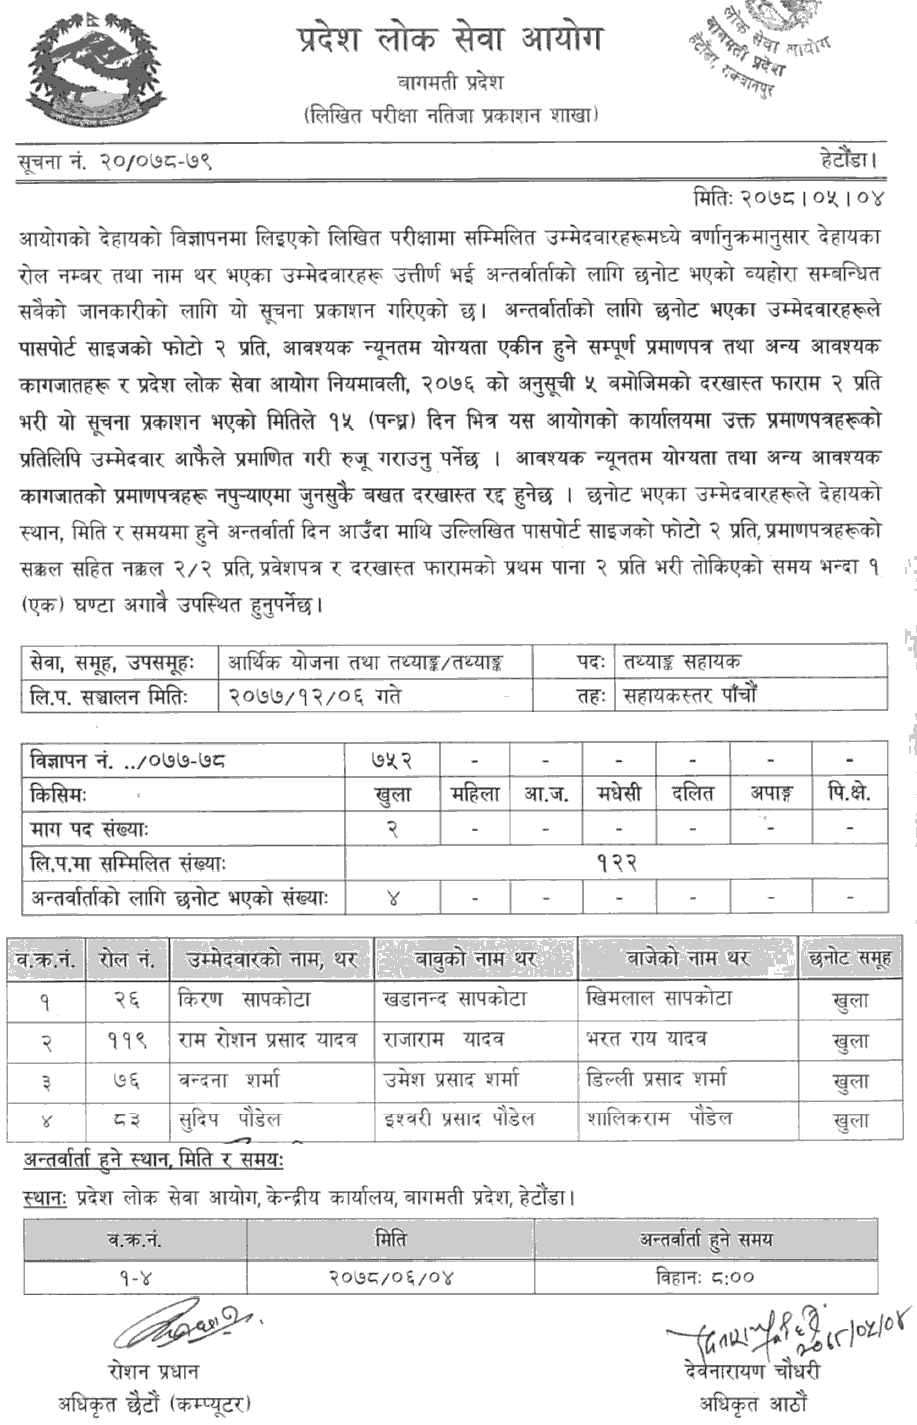 Bagmati Pradesh Lok Sewa Aayog Written Exam Result of 5th Level Statistics Assistant